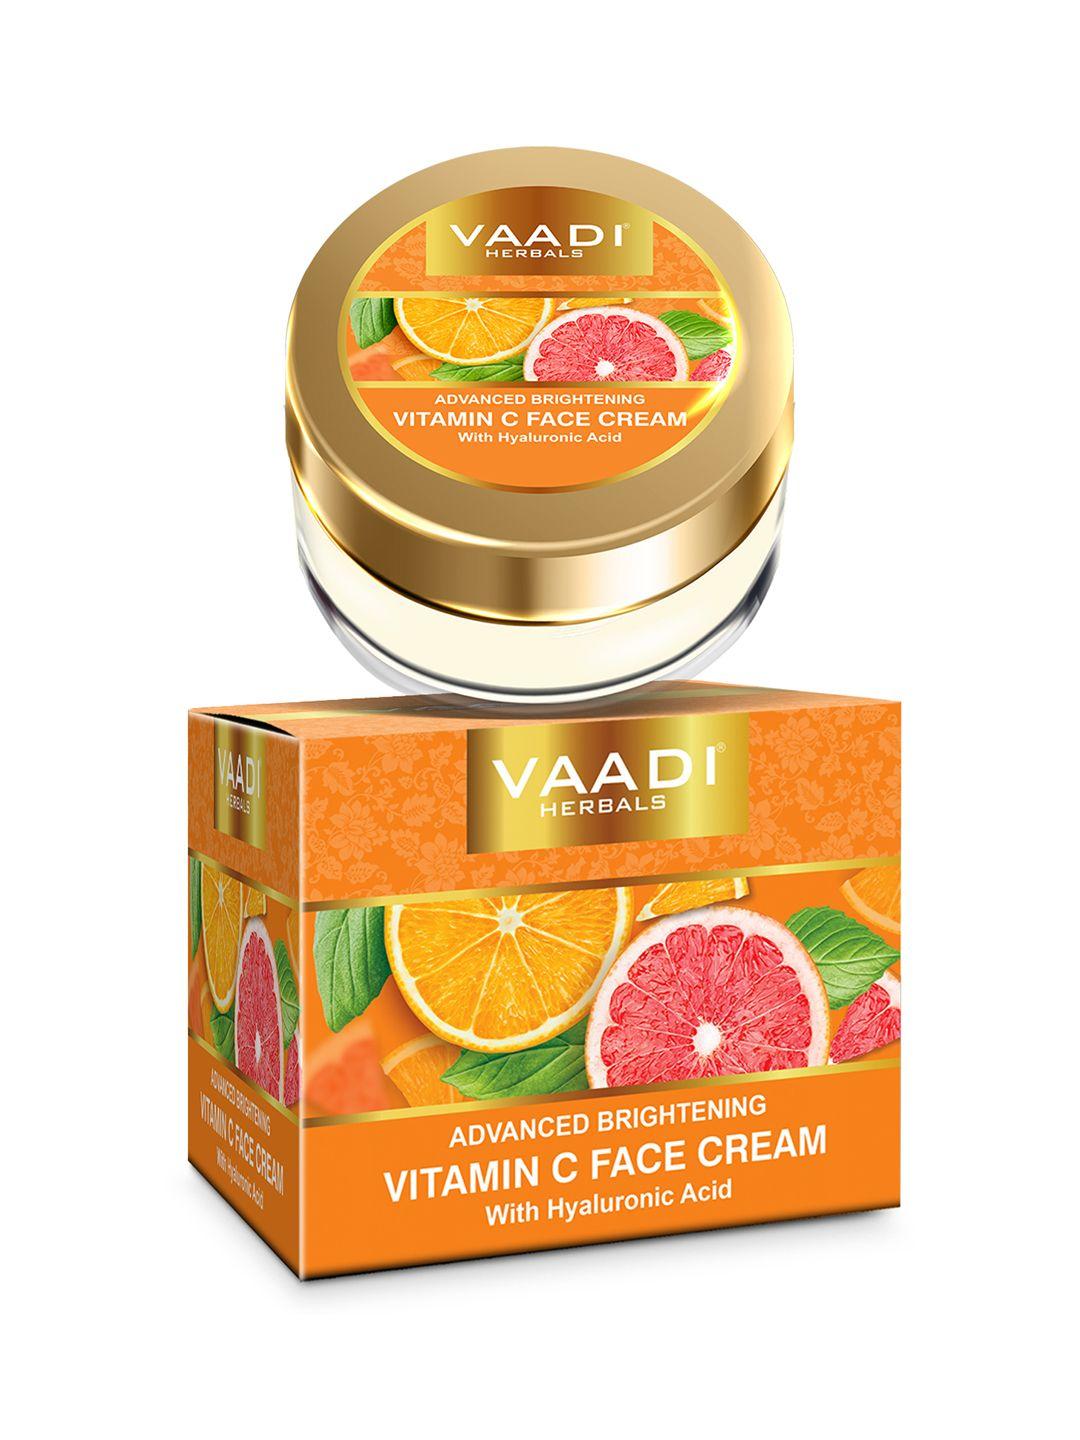 vaadi herbals advanced brightening vitamin c face cream with hyaluronic acid - 30 g